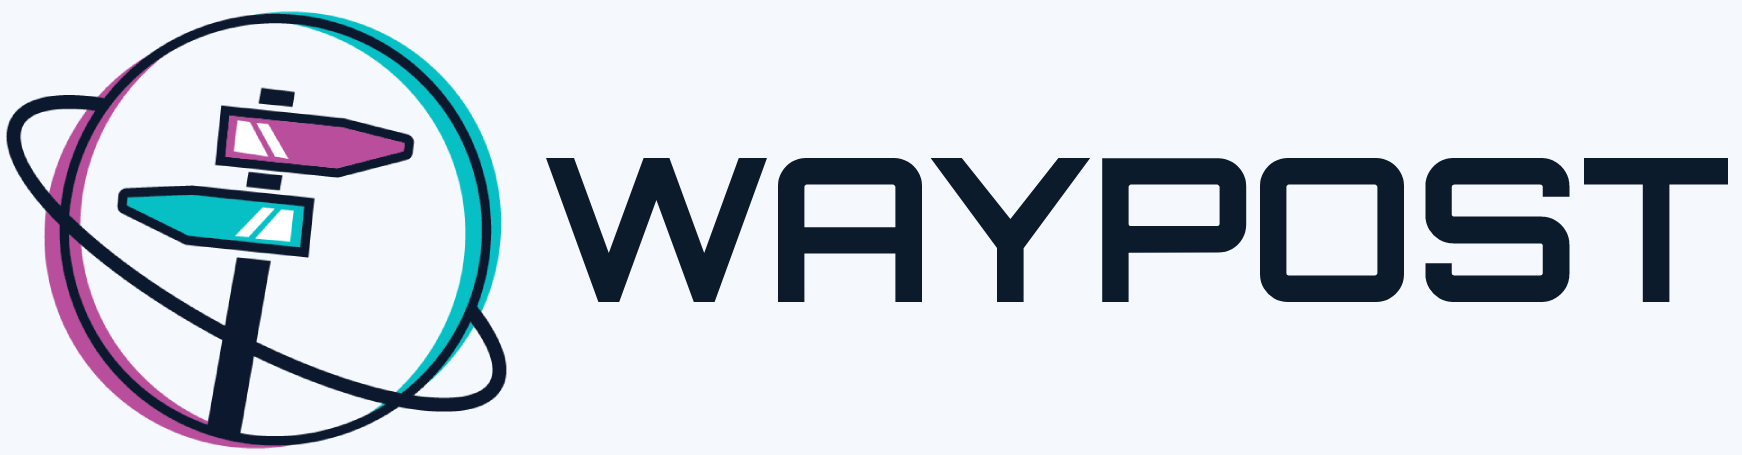 waypost logo